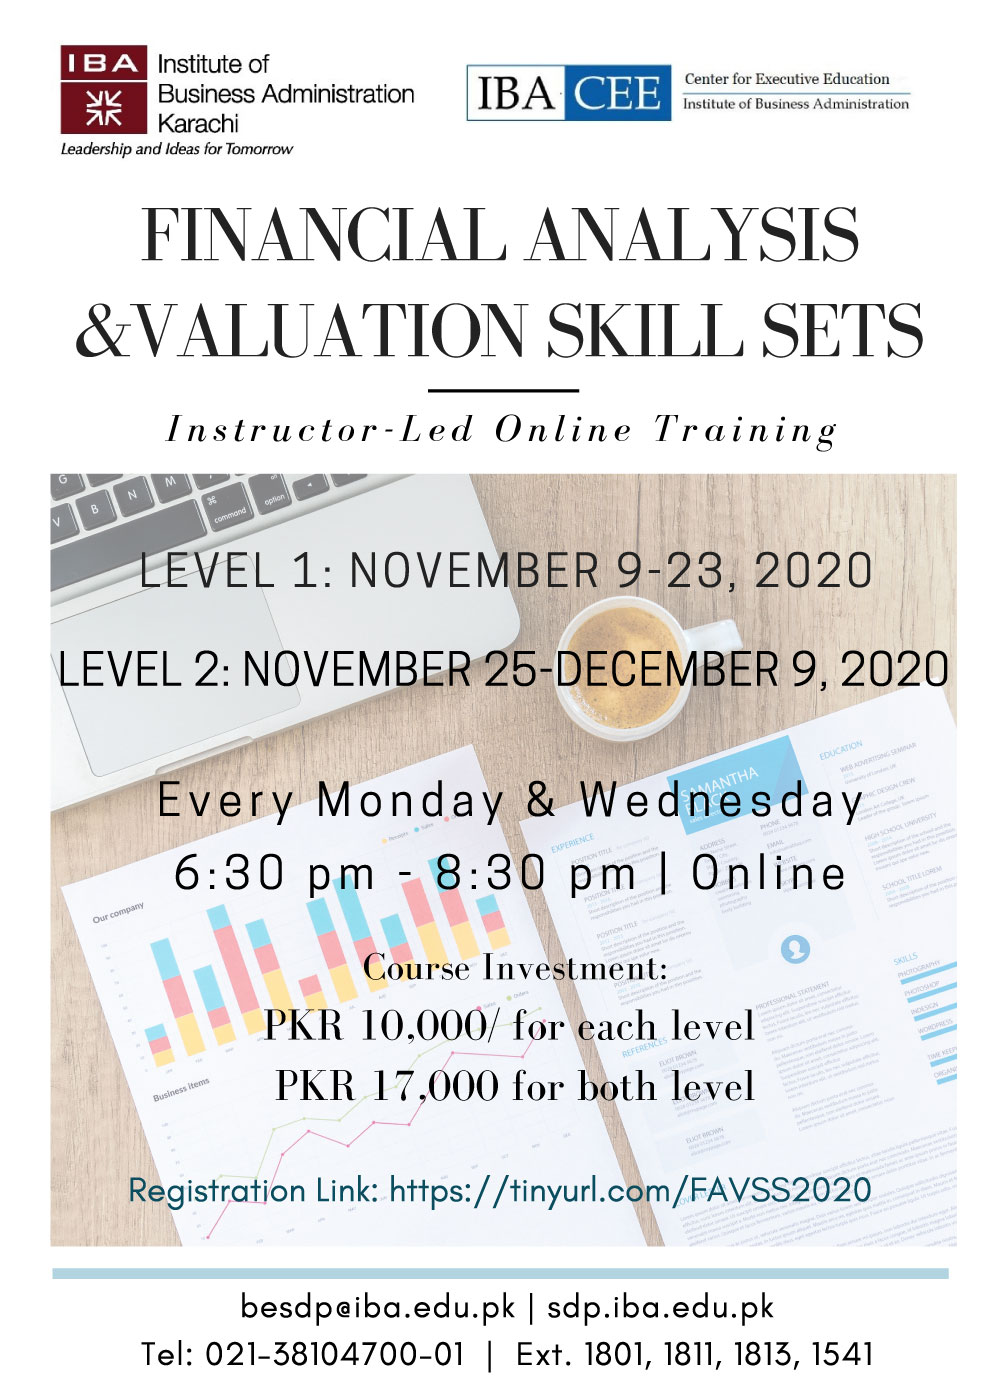 Financial analysis &valuation skill sets